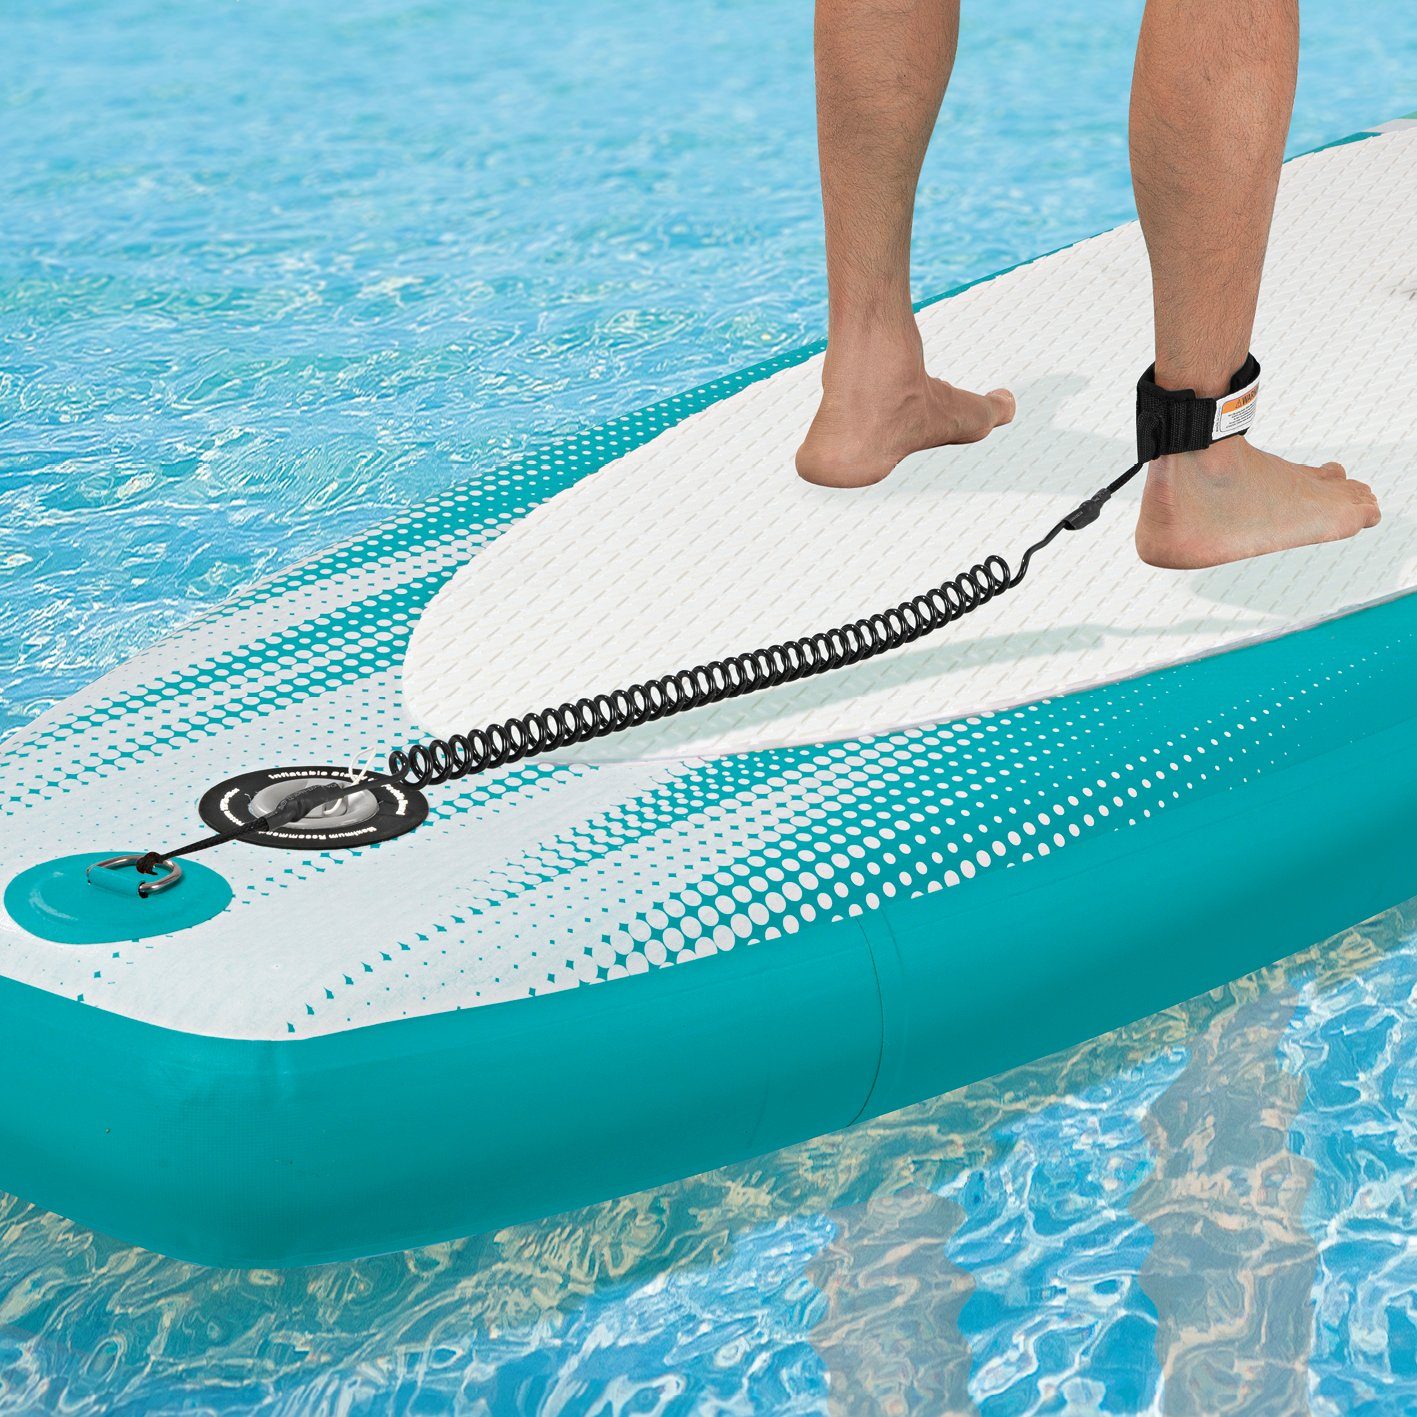 MAXXMEE Inflatable Paddel 300 SUP-Board SUP Stand türkis/weiß up Komplett Paddling Paddle-Board Board 110 cm, kg, Zubehör, inkl. Set Stand-Up